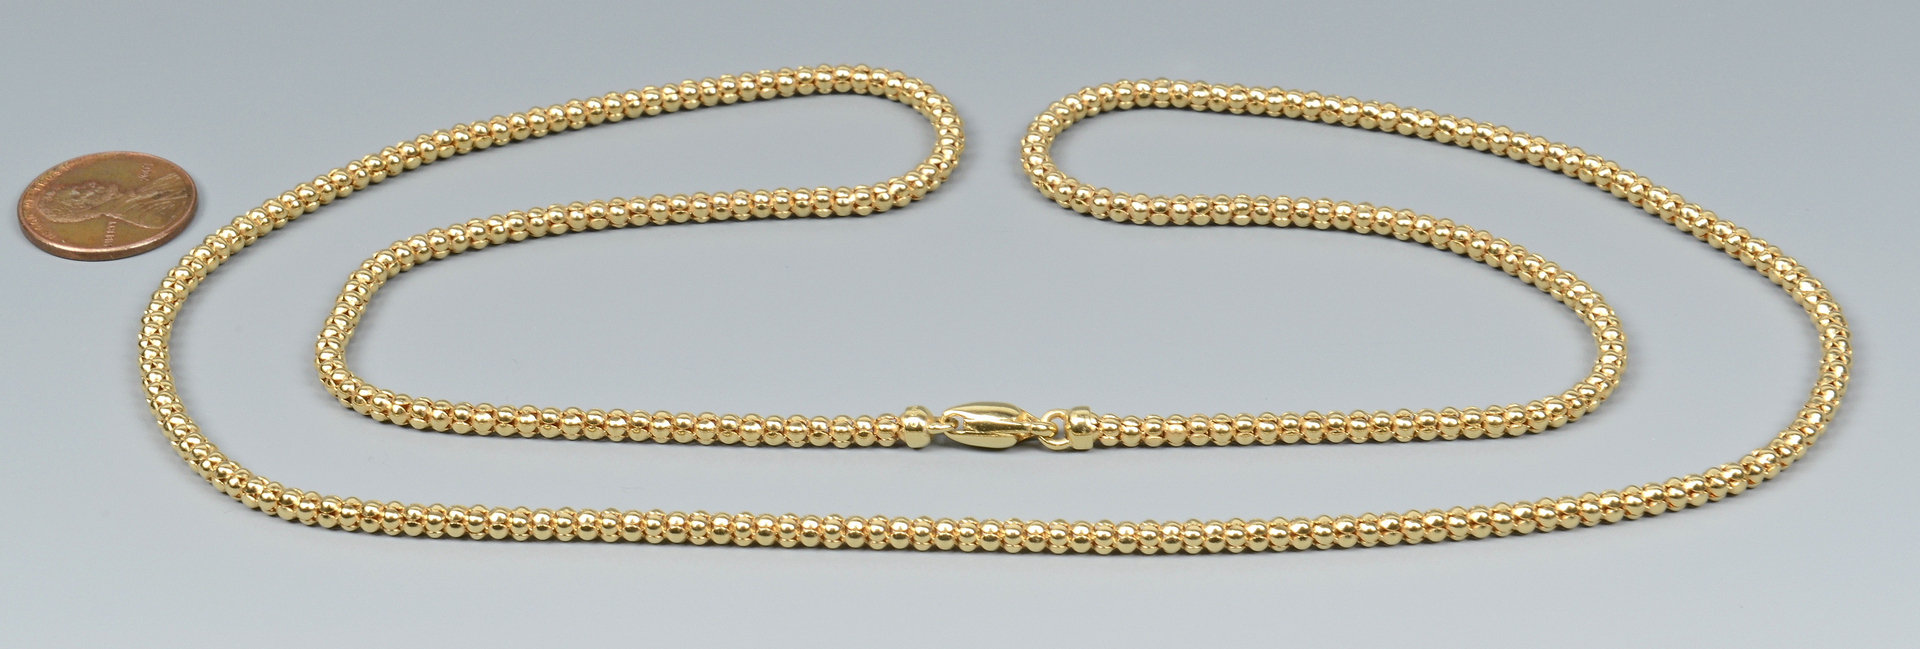 Lot 3088066: 18k Gold Chain, 20.3 grams